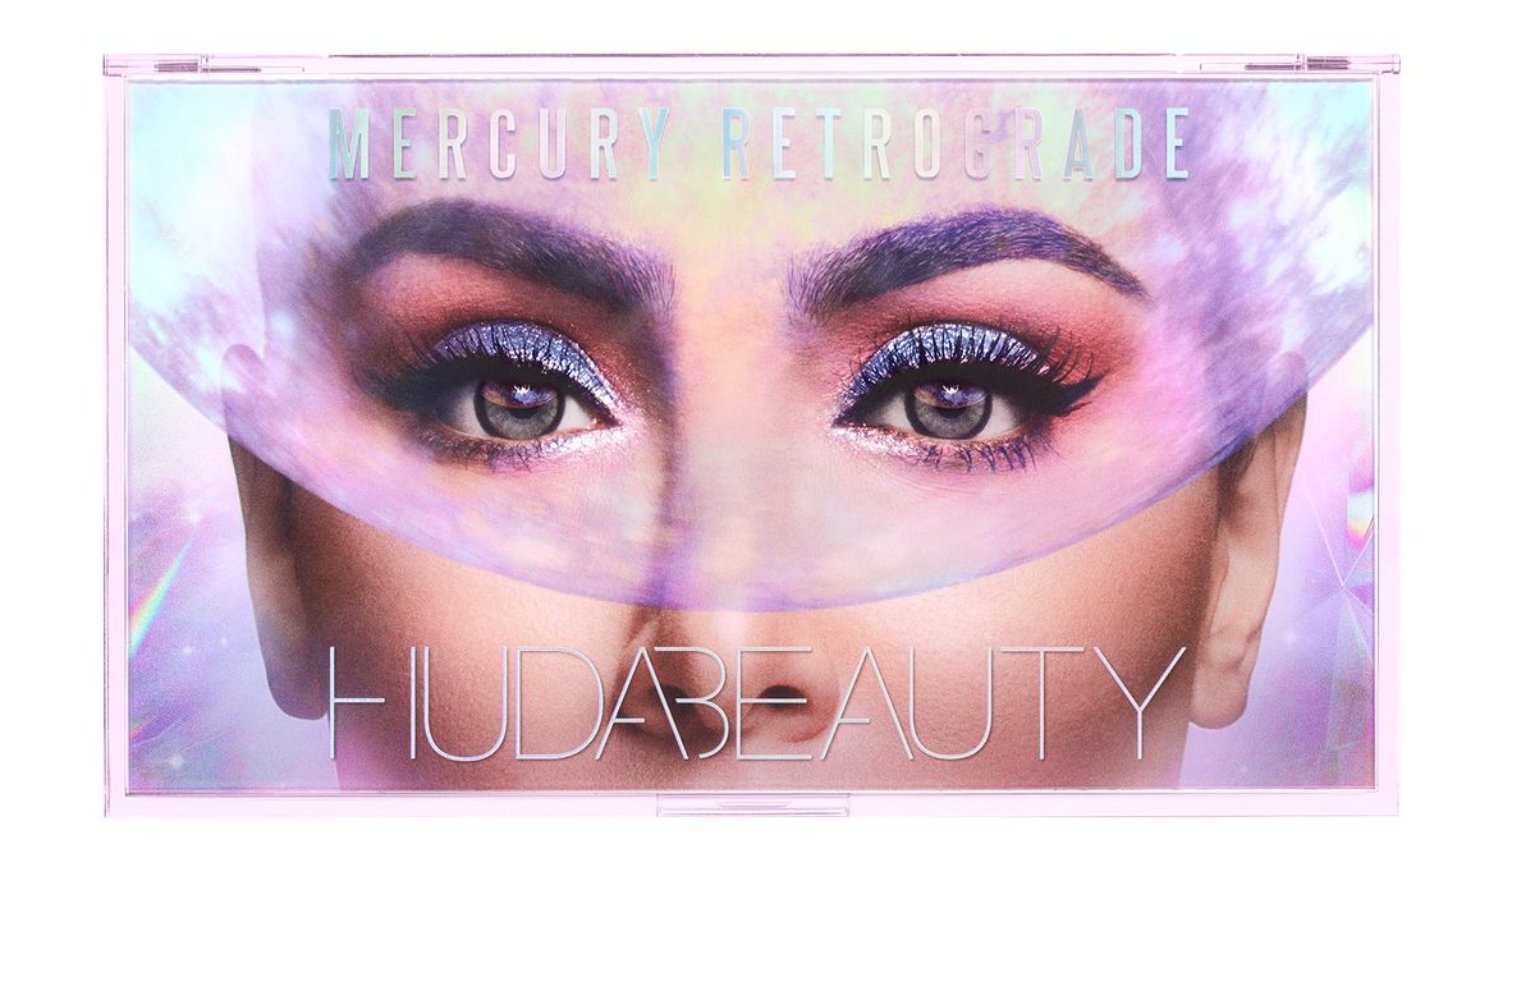 Huda Beauty Mercury Retrograde Eyeshadow Palette - The Face Method